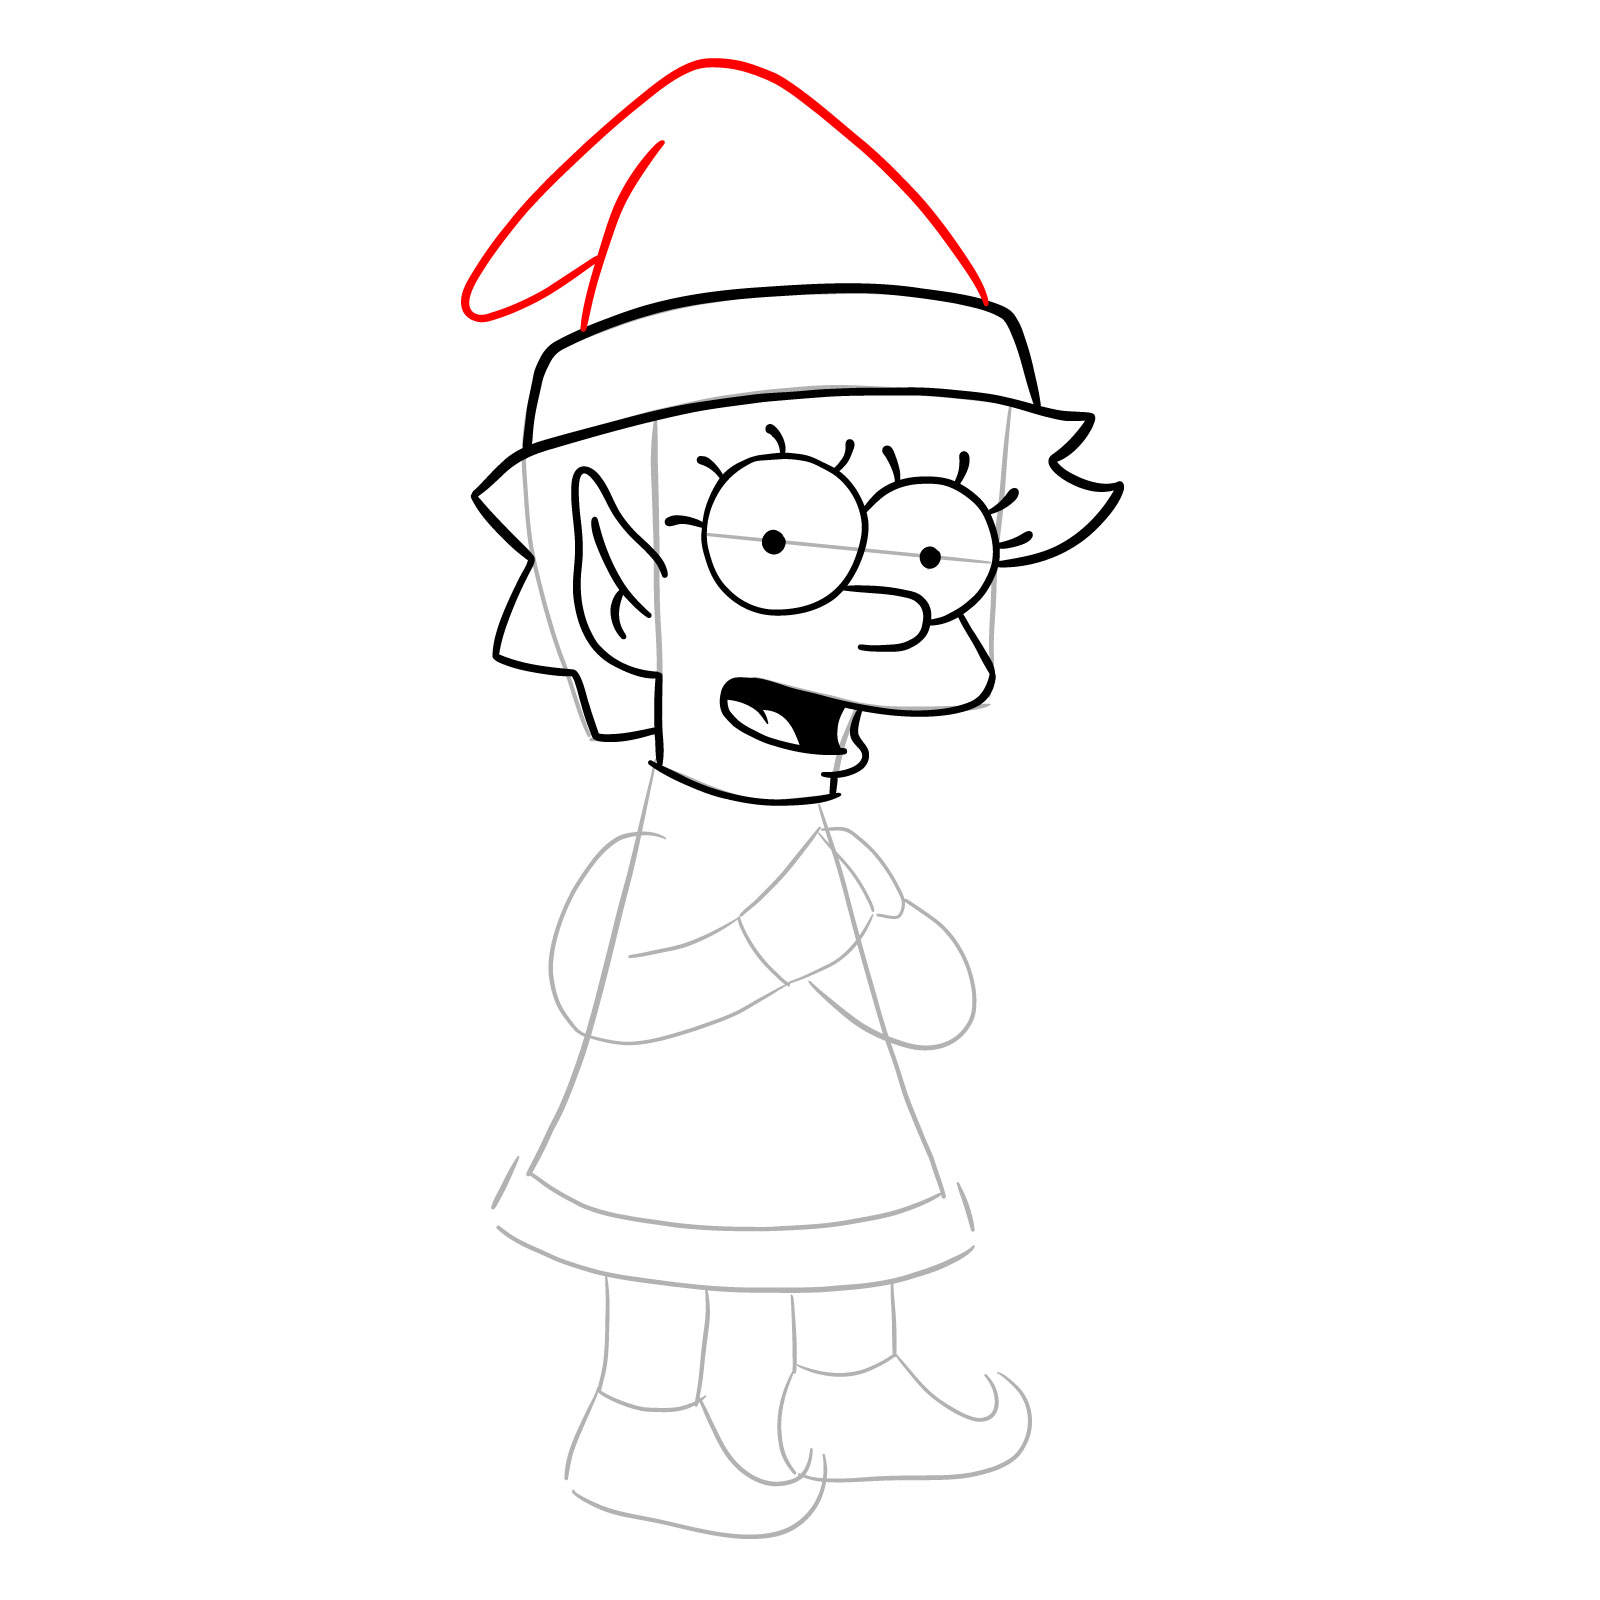 How to draw Christmas Elf Lisa Simpson - step 16